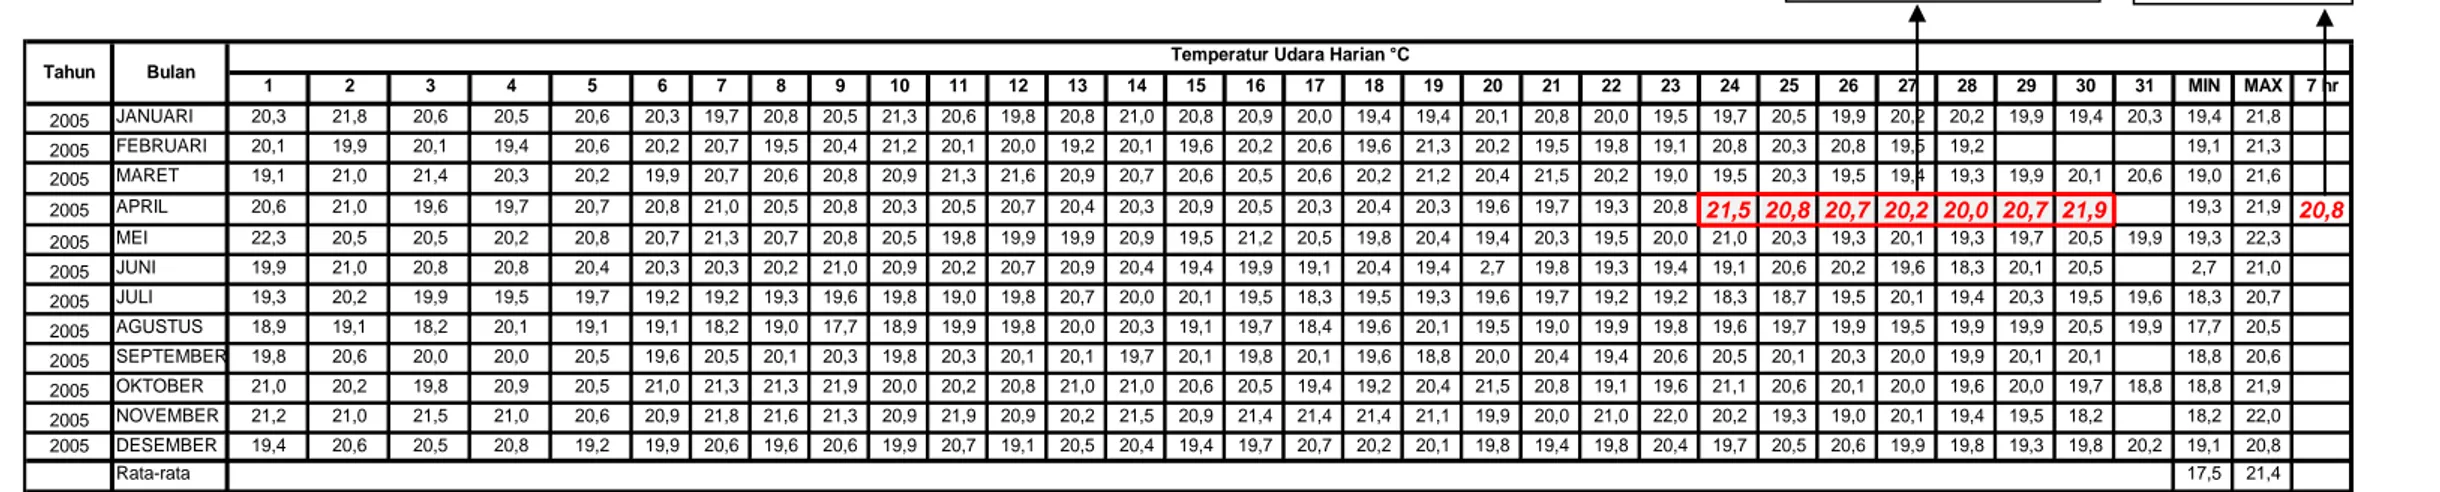 Tabel E2 - Data Temperatur Udara Harian (5 tahun terakhir ) untuk Daerah Lembang 